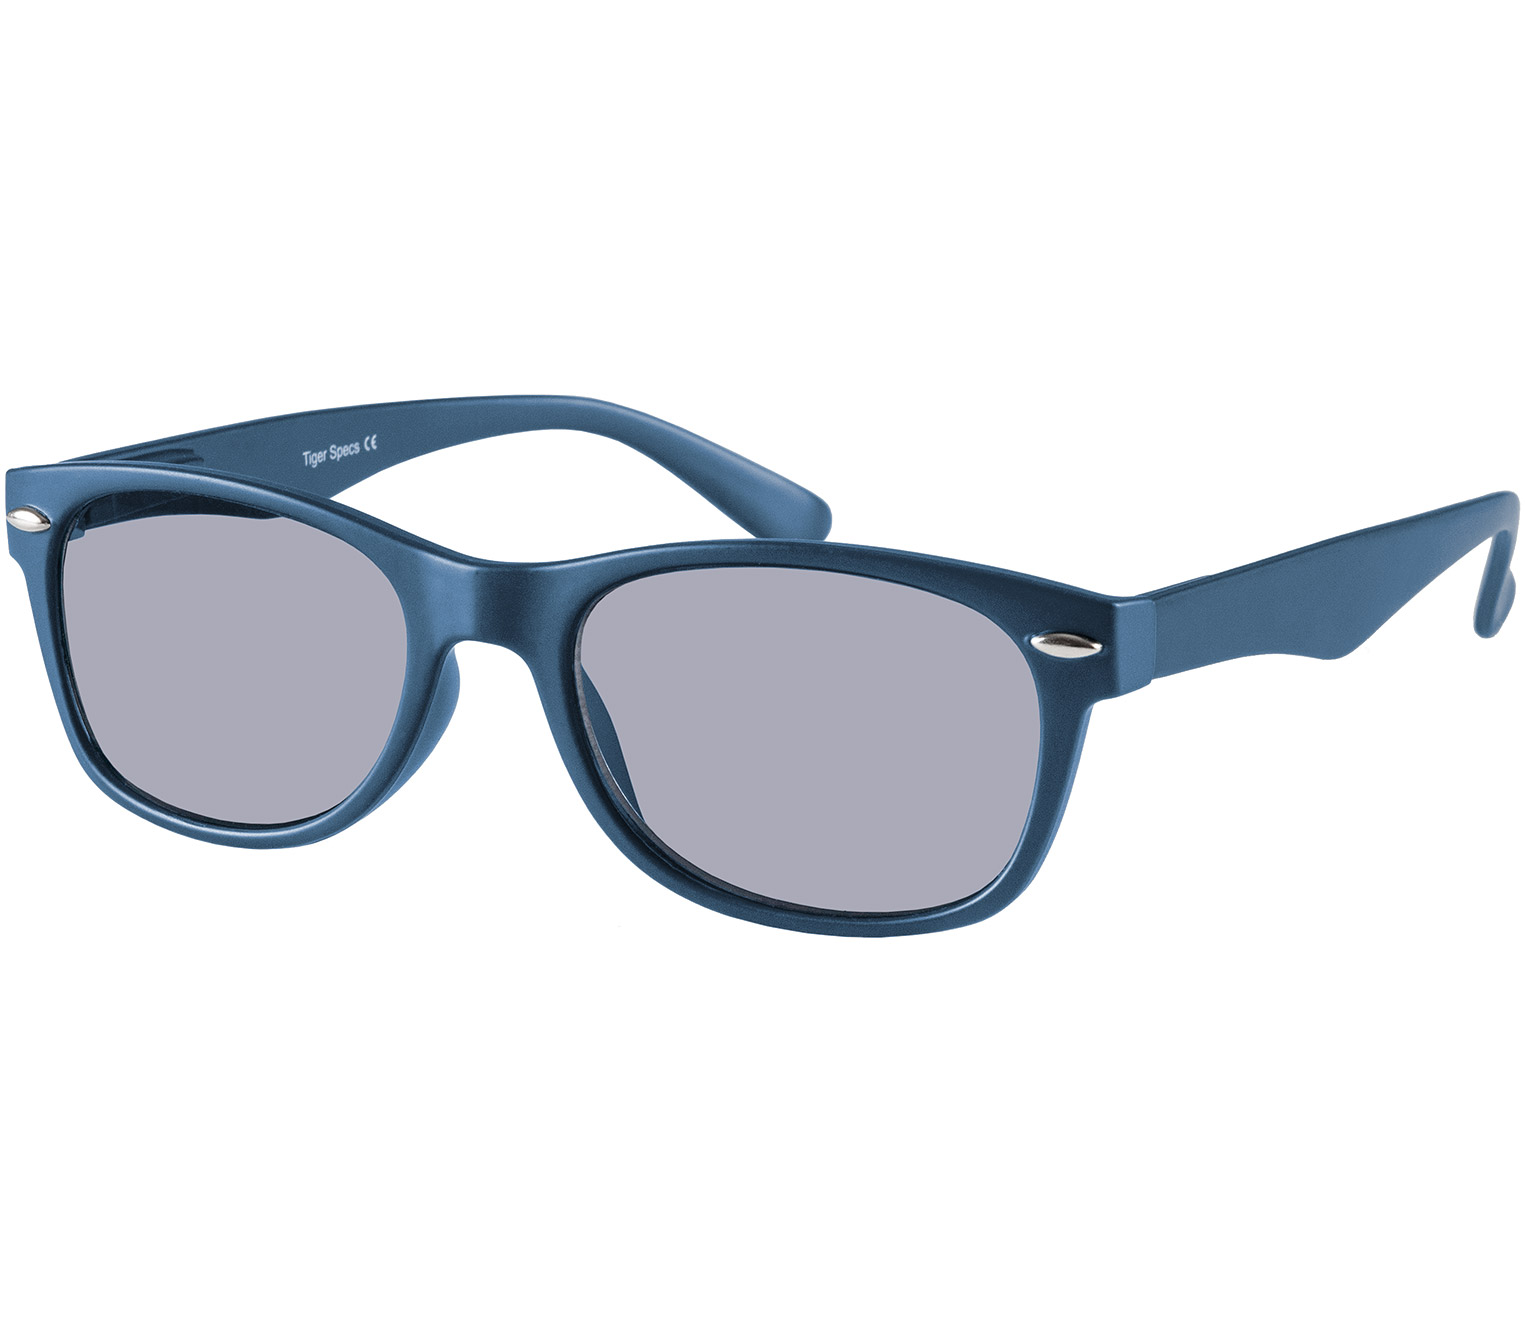 Main Image (Angle) - Cortez (Blue) Sunglasses